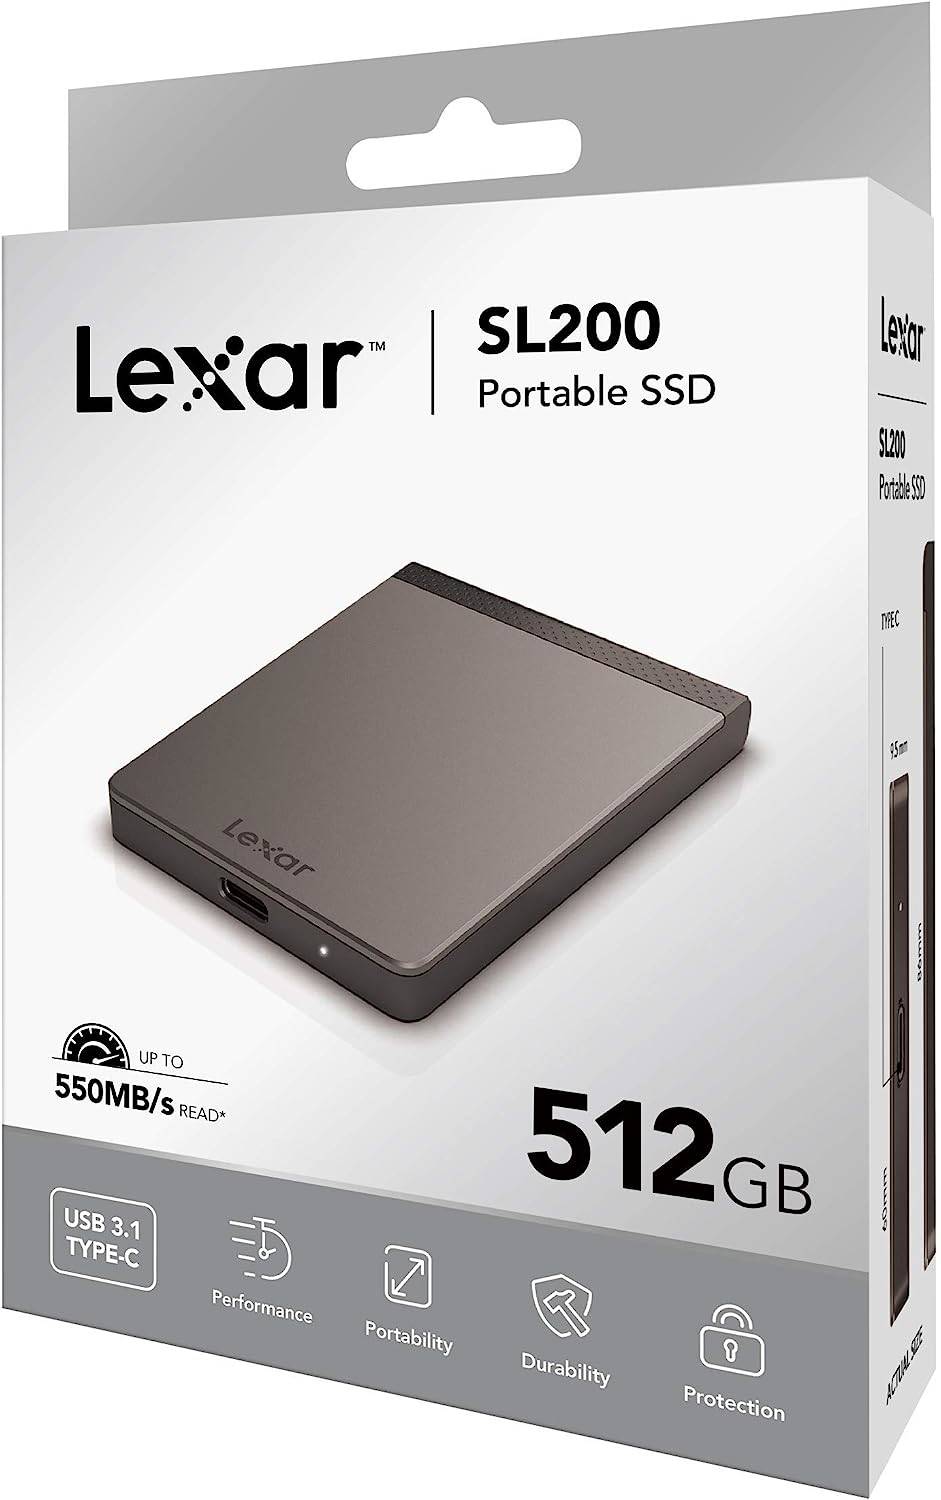 Lexar 512GB SL200 محرك أقراص SSD خارجي محمول USB 3.1 من النوع C